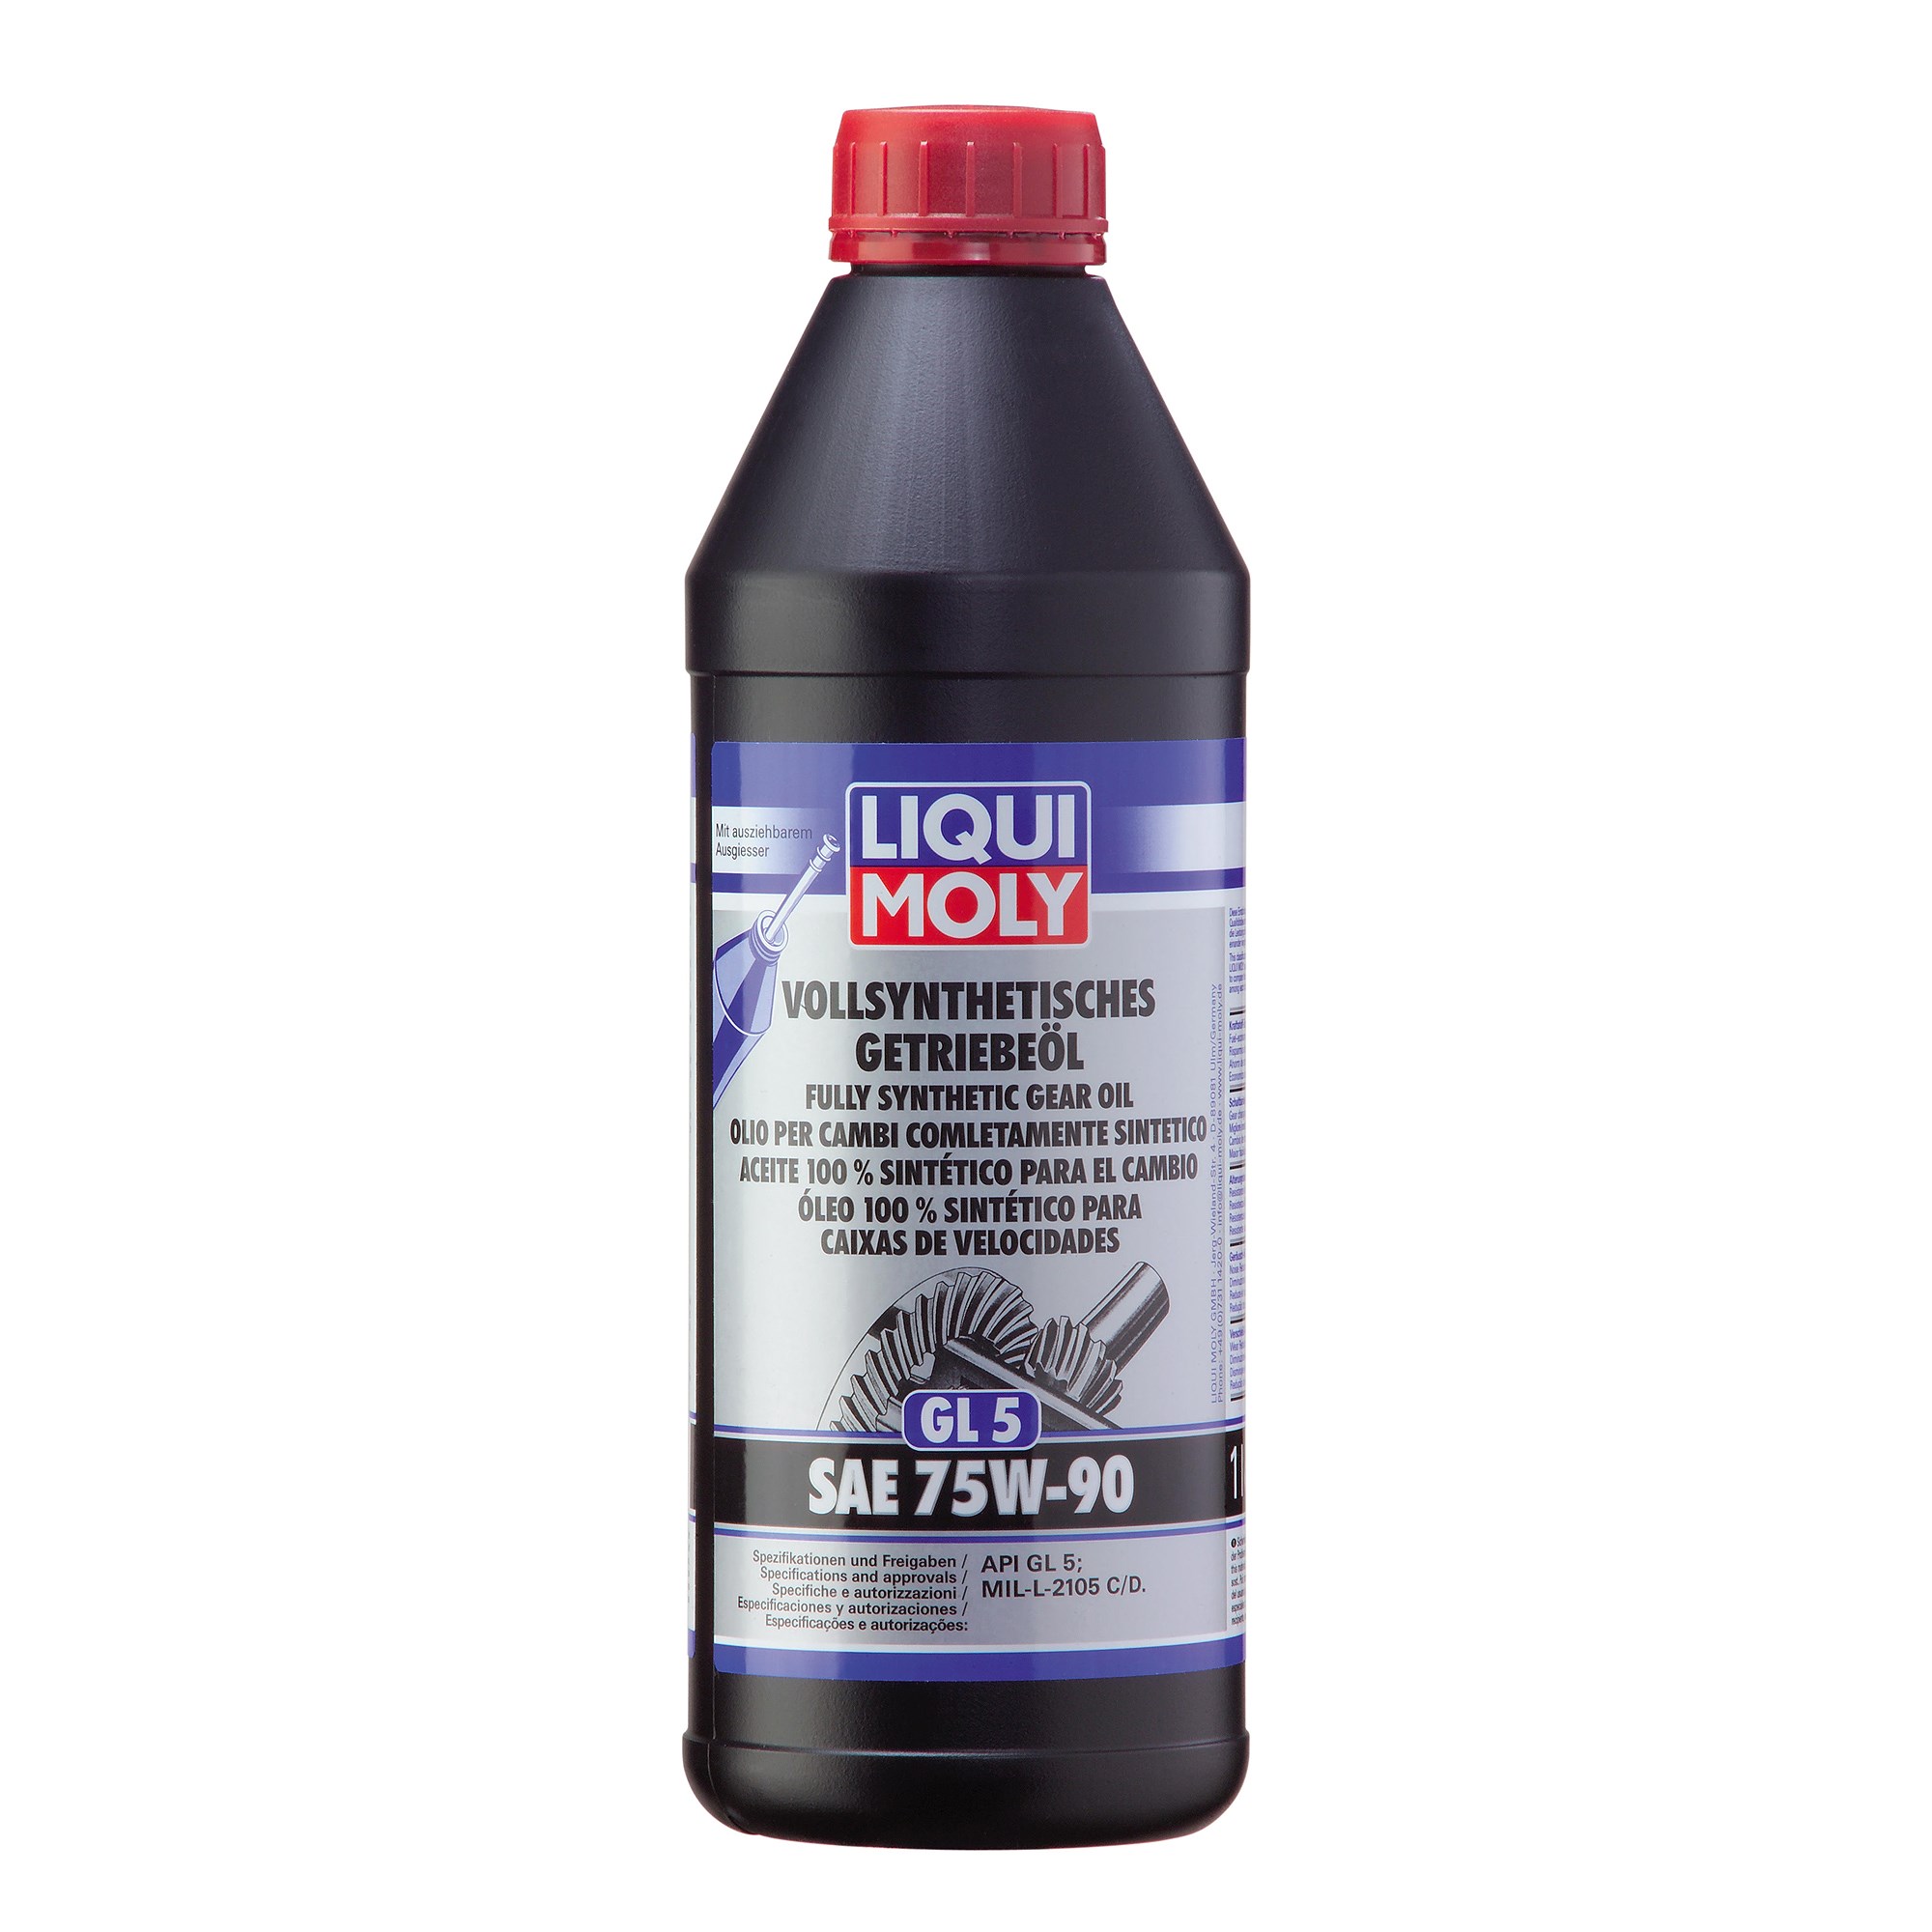 LIQUI MOLY 1 L Vollsynthetisches Getriebeöl (GL5) SAE 75W-90